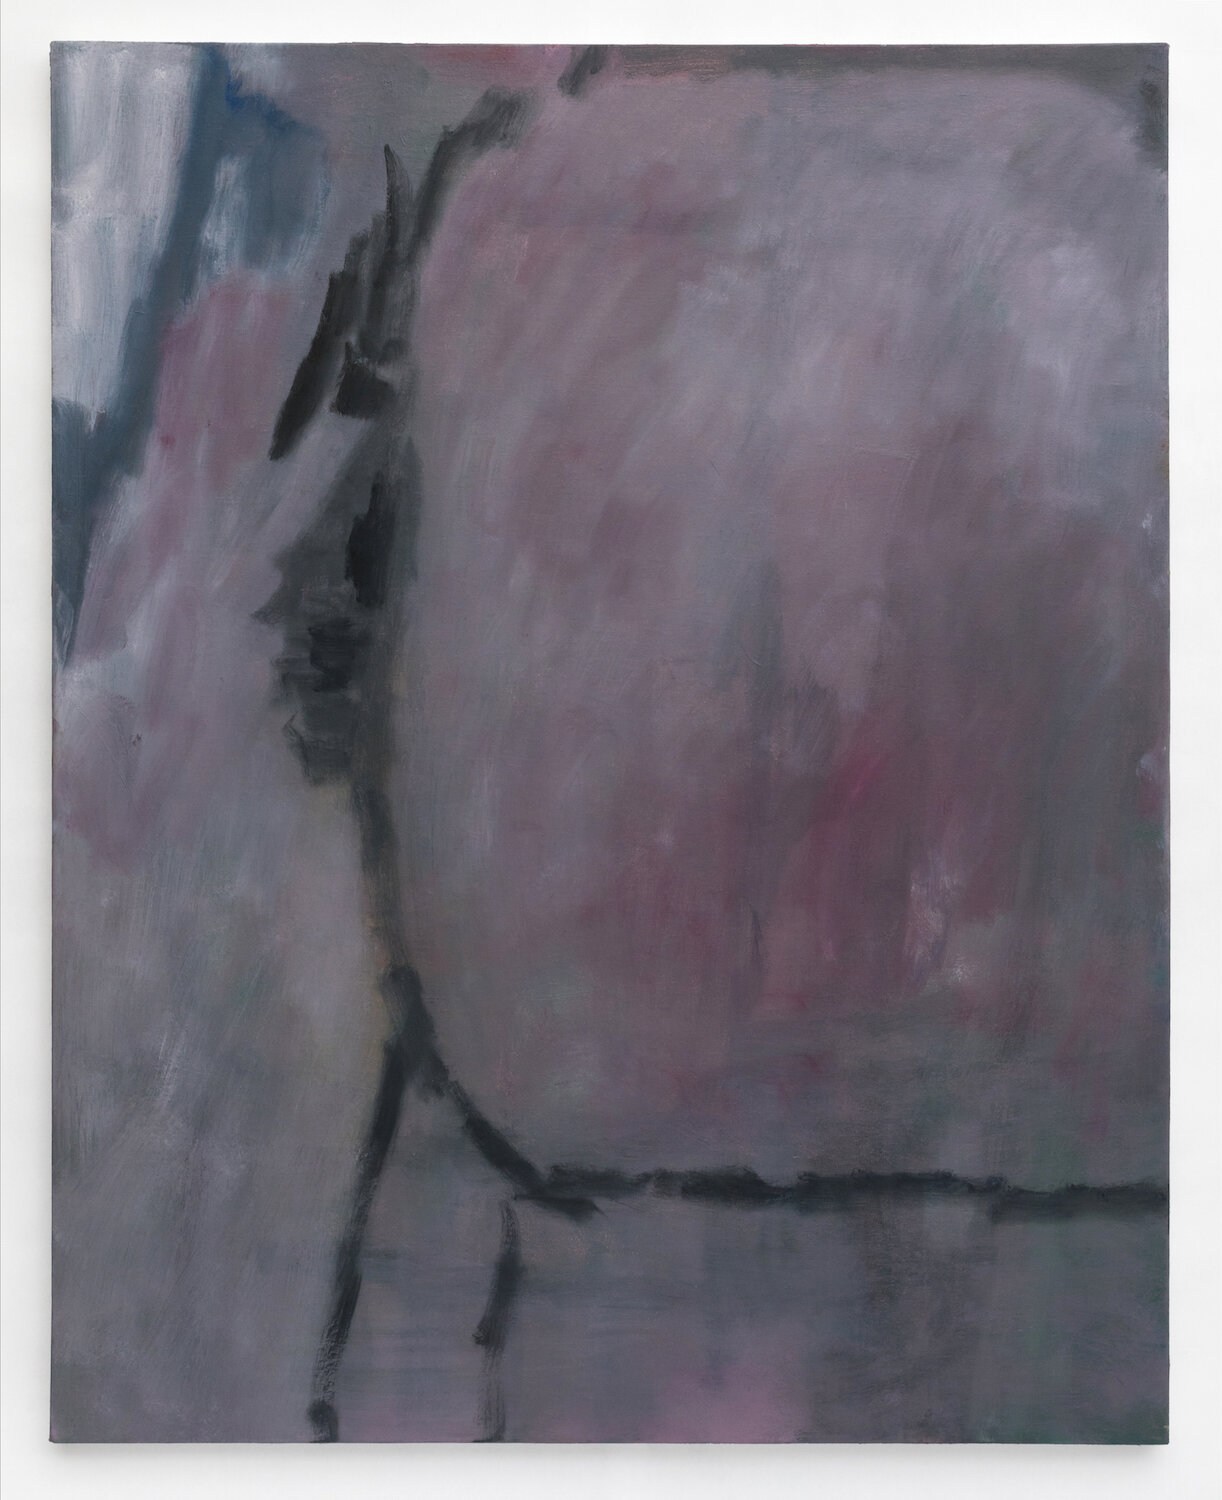 Dusk, 2019, oil on canvas, 50 x 40 inches